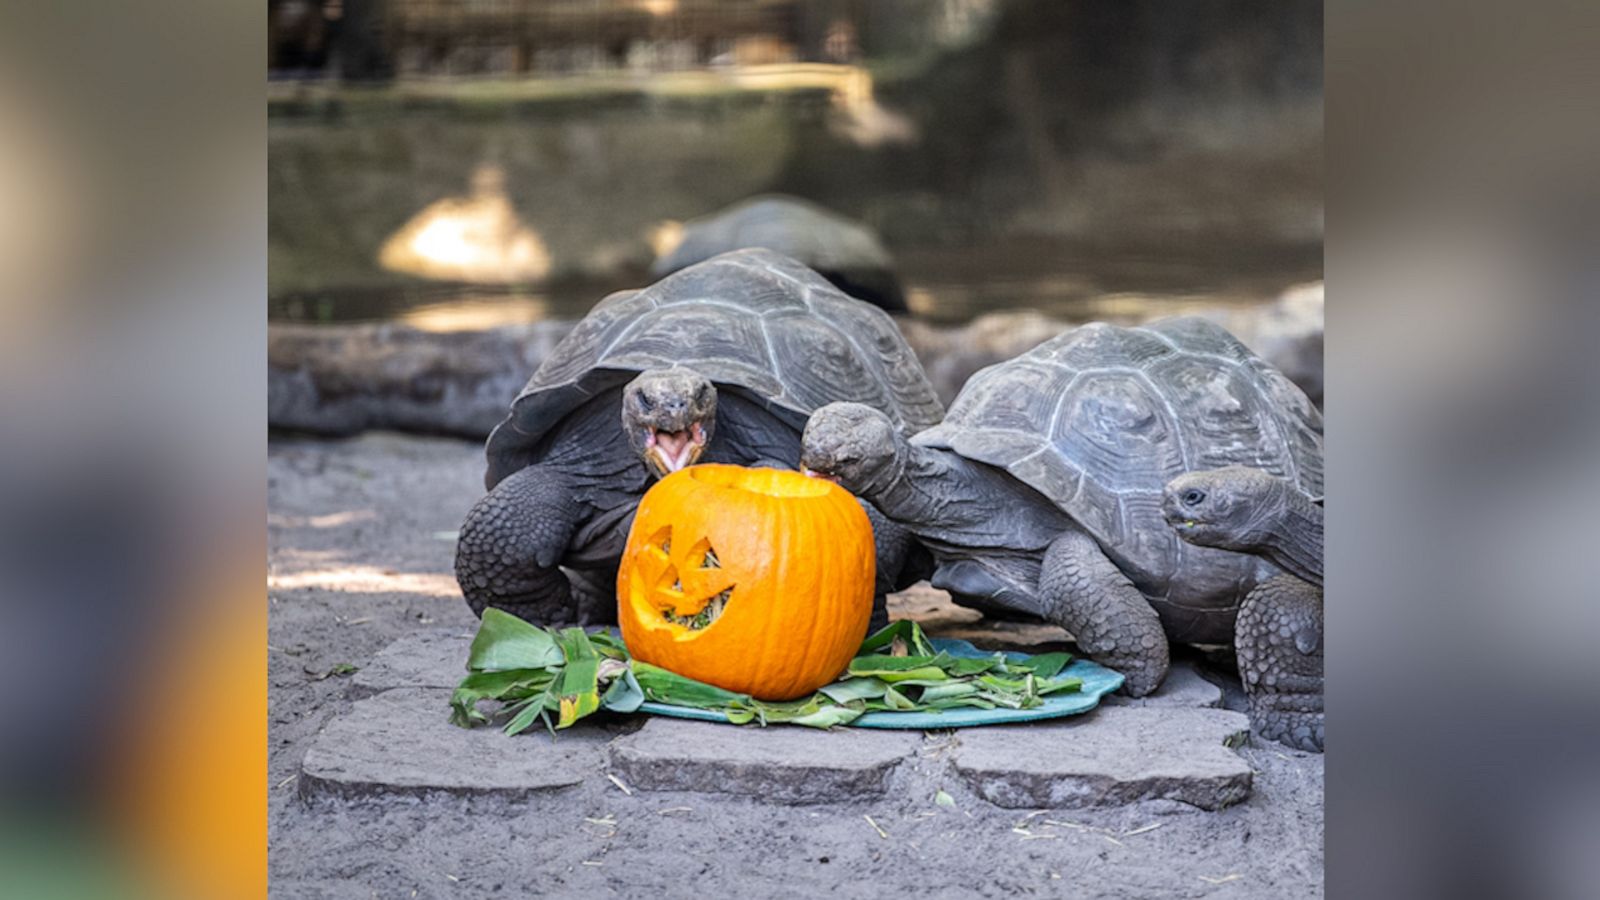 VIDEO: Galapagos tortoises at Disney's Animal Kingdom celebrate Halloween with pumpkins